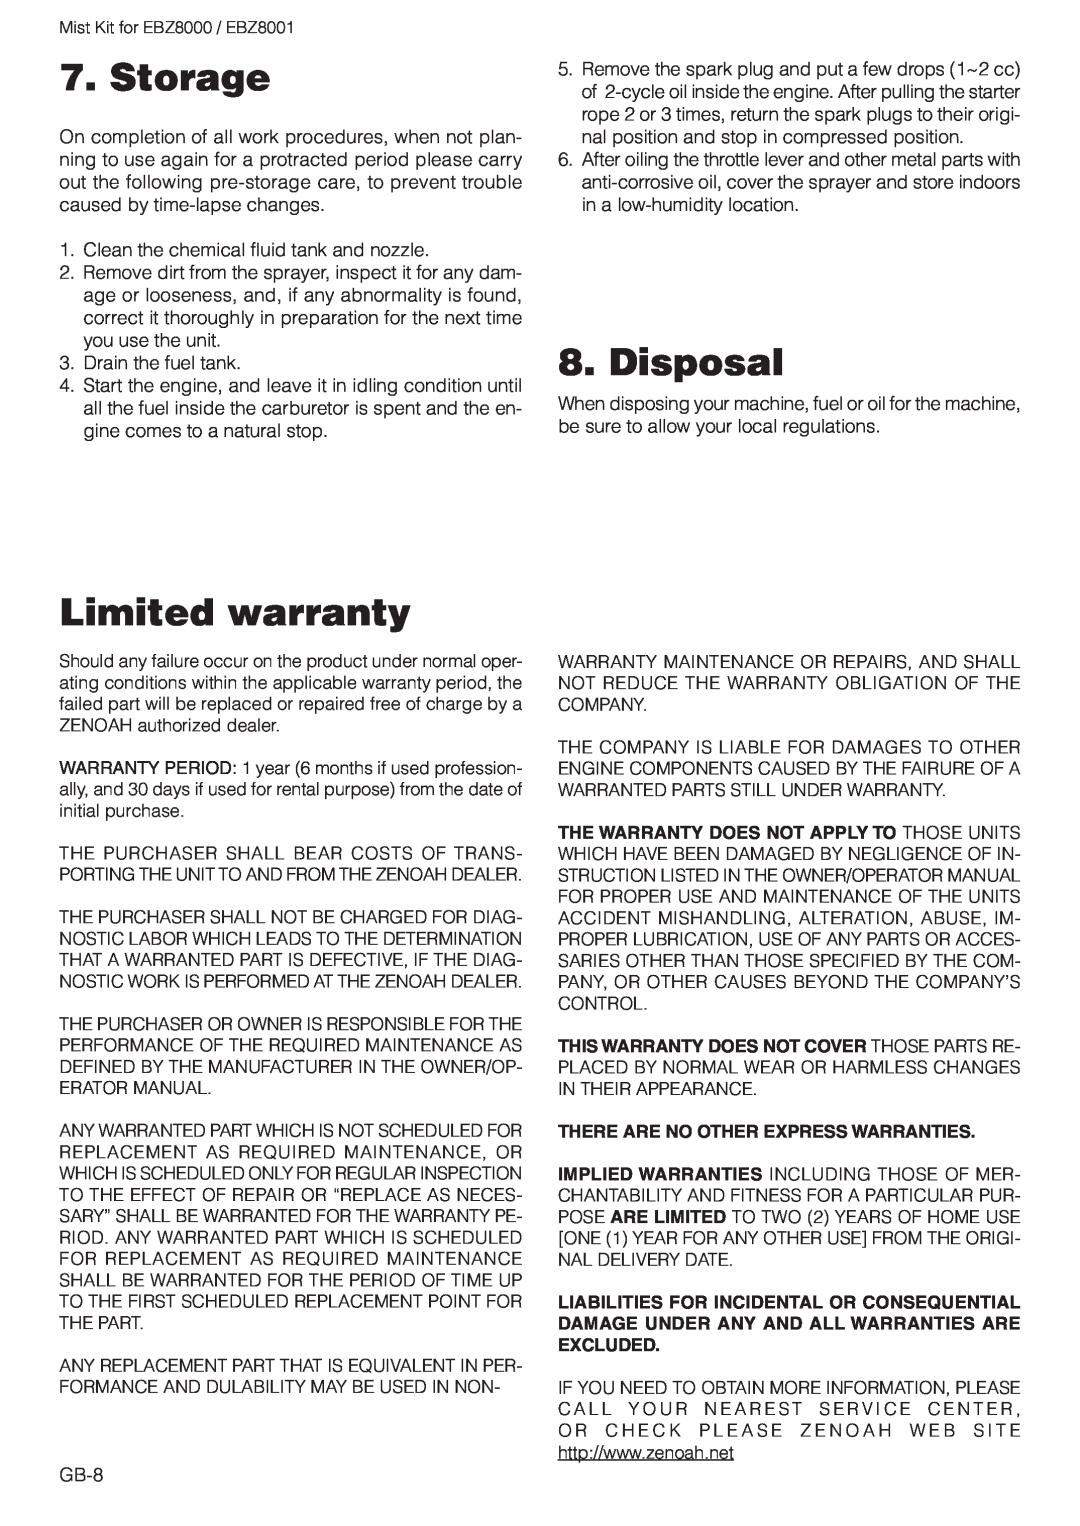 Zenoah EBZ8000 owner manual Storage, Limited warranty, Disposal 